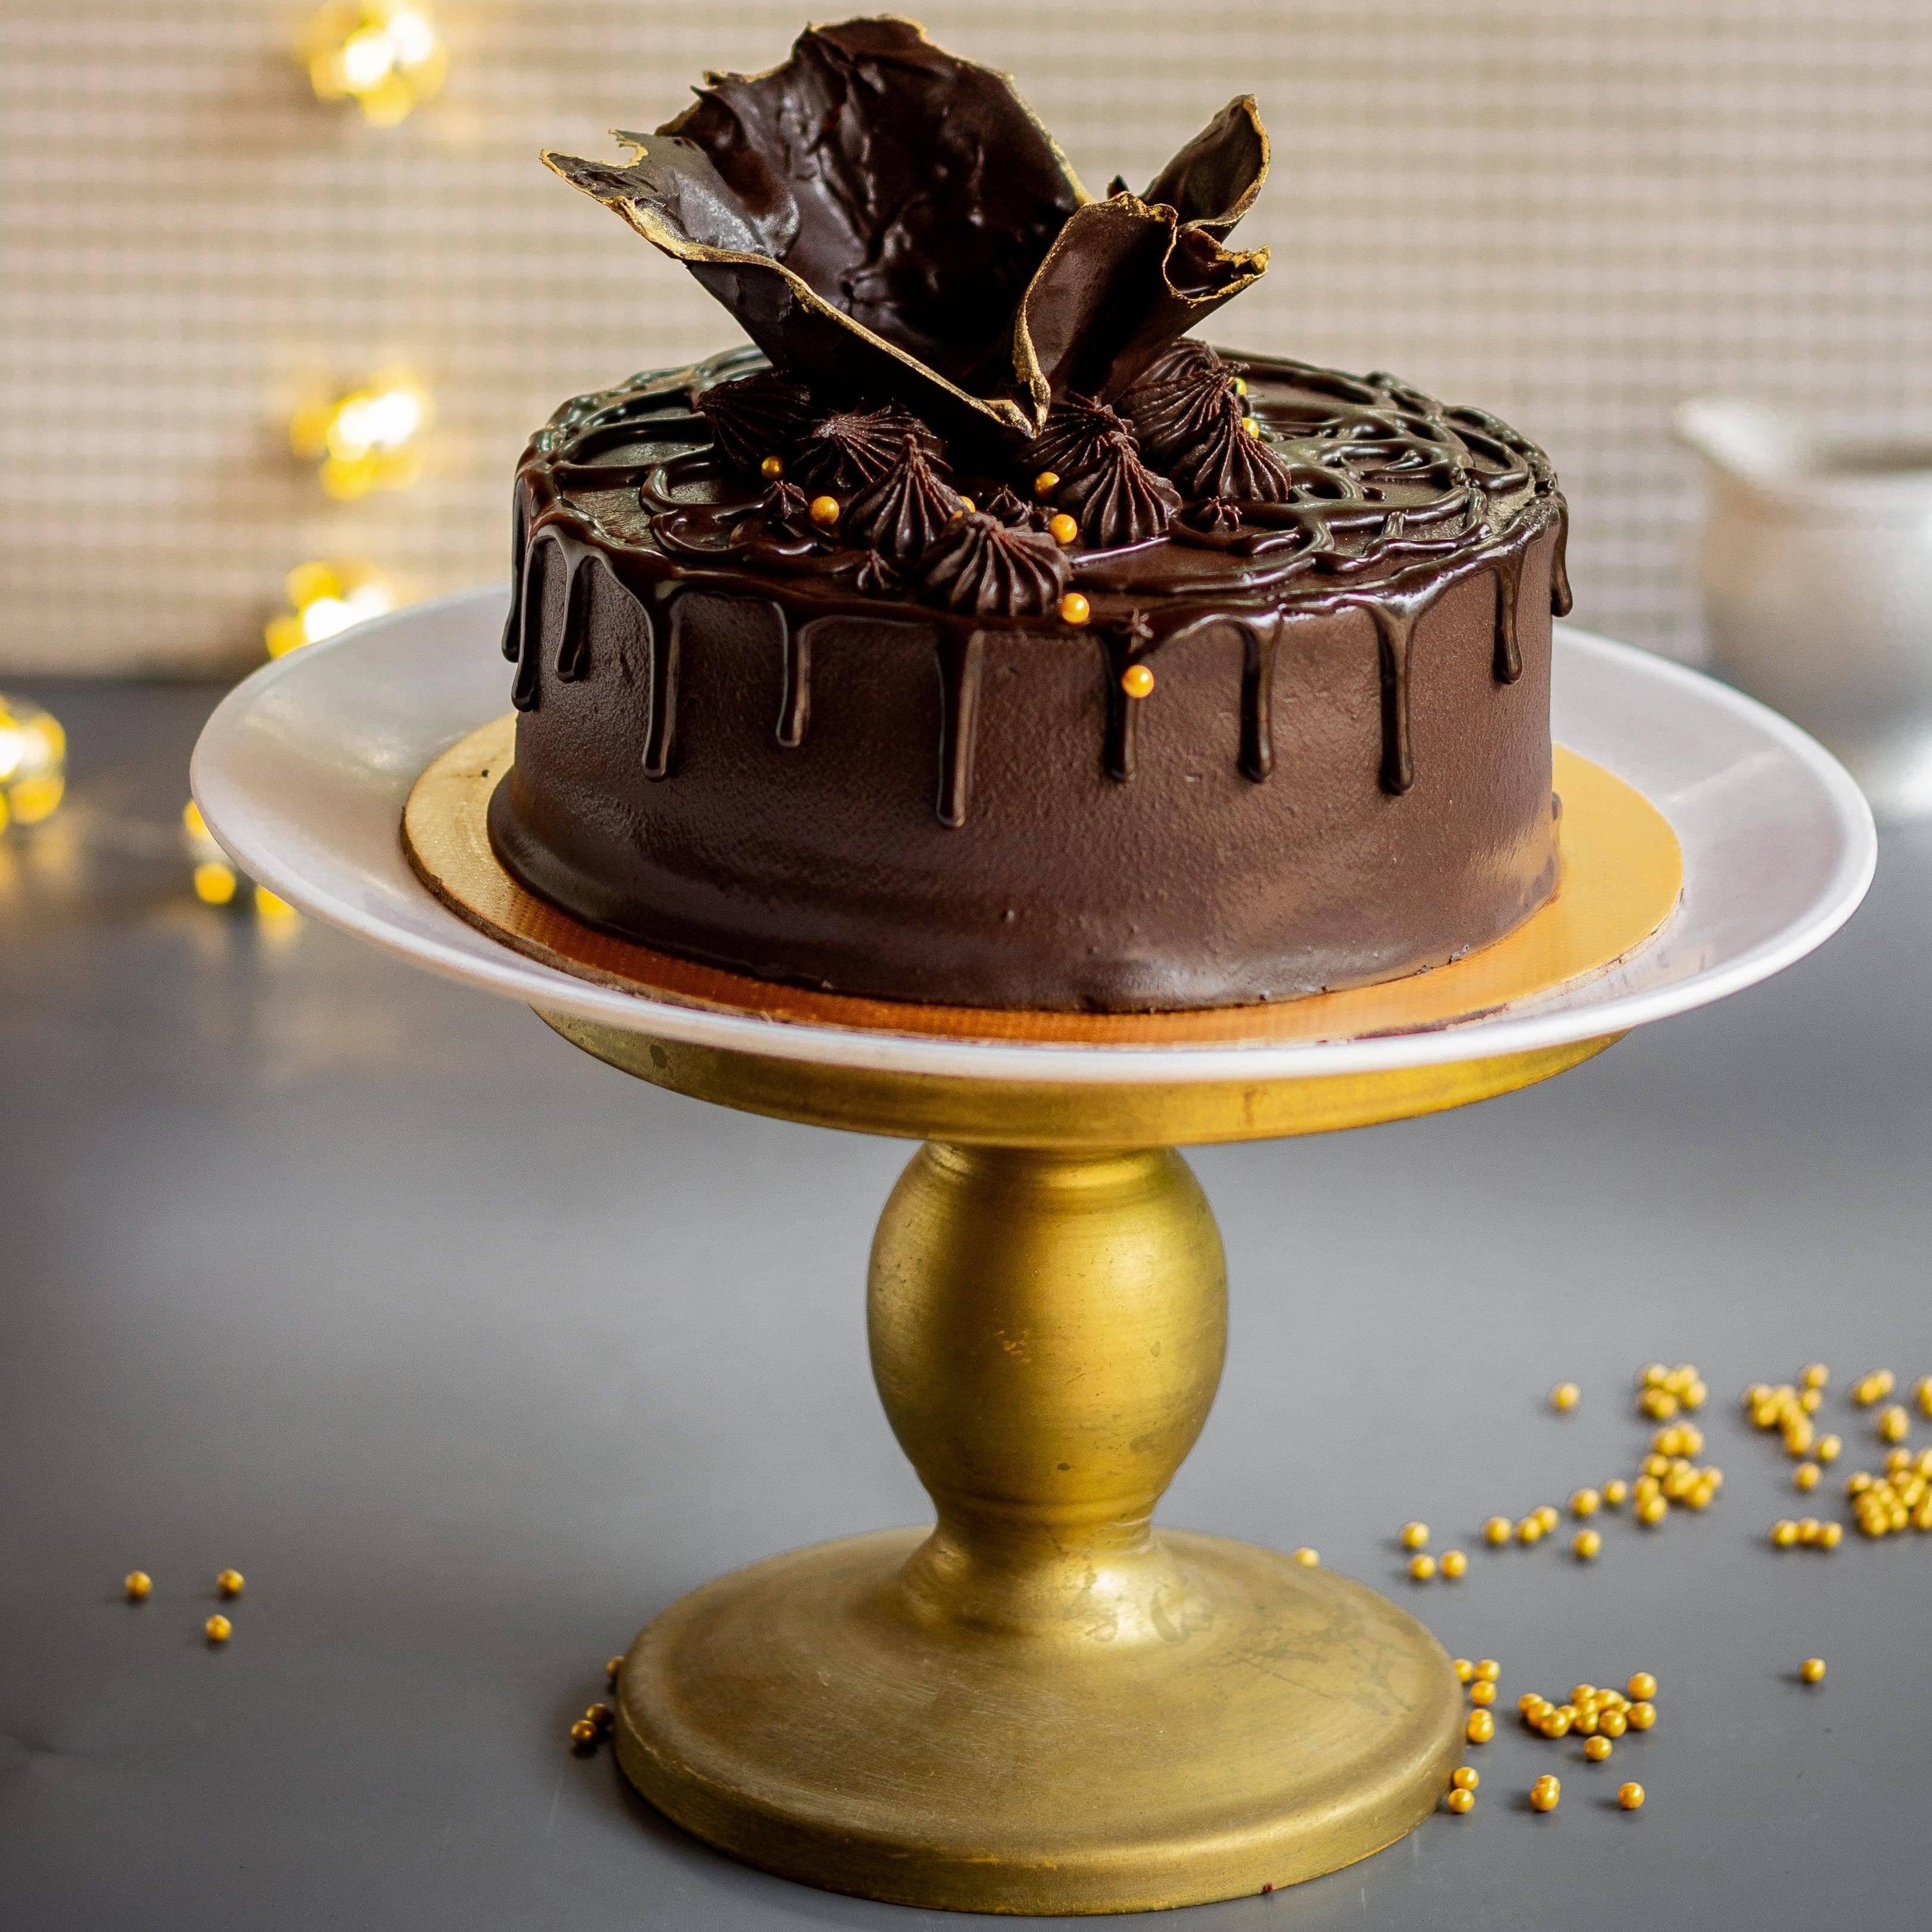 Konditor ‐ Cakes & Brownies Delivered Nationwide